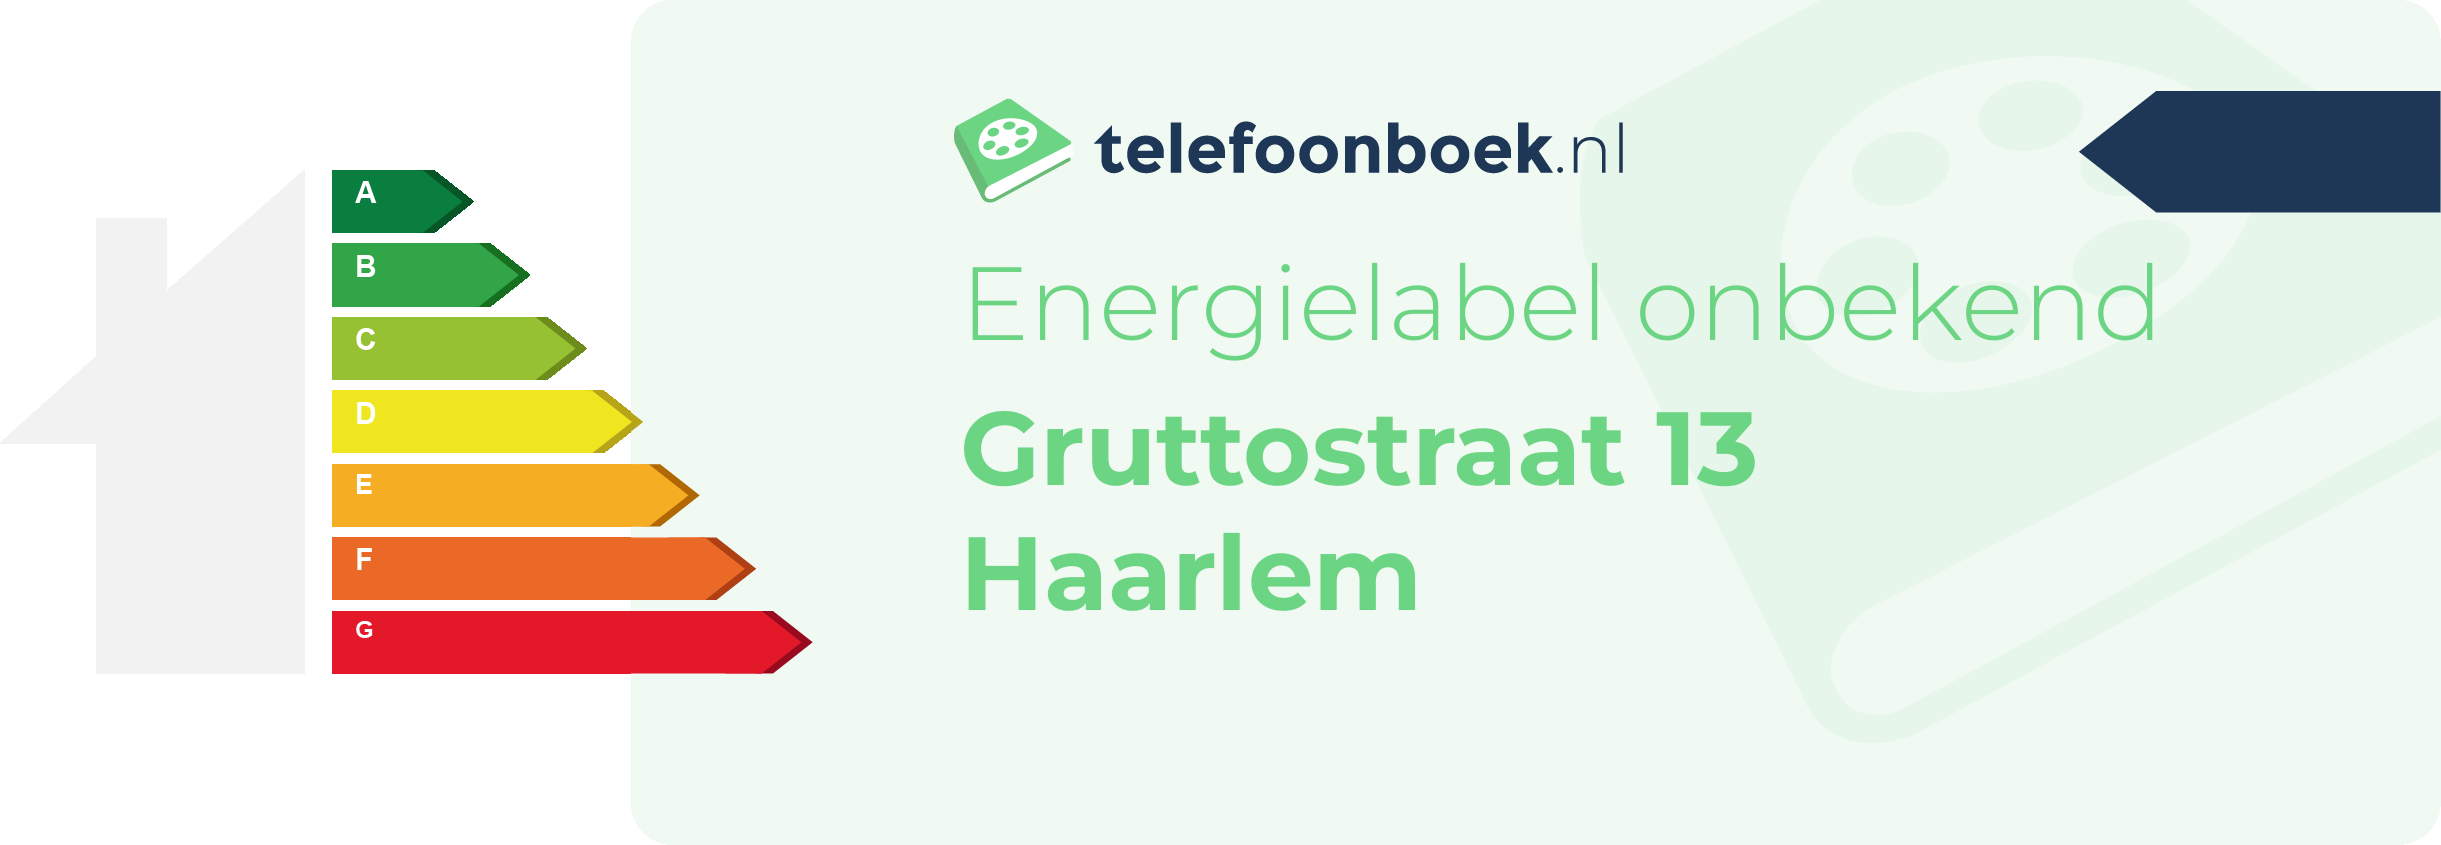 Energielabel Gruttostraat 13 Haarlem